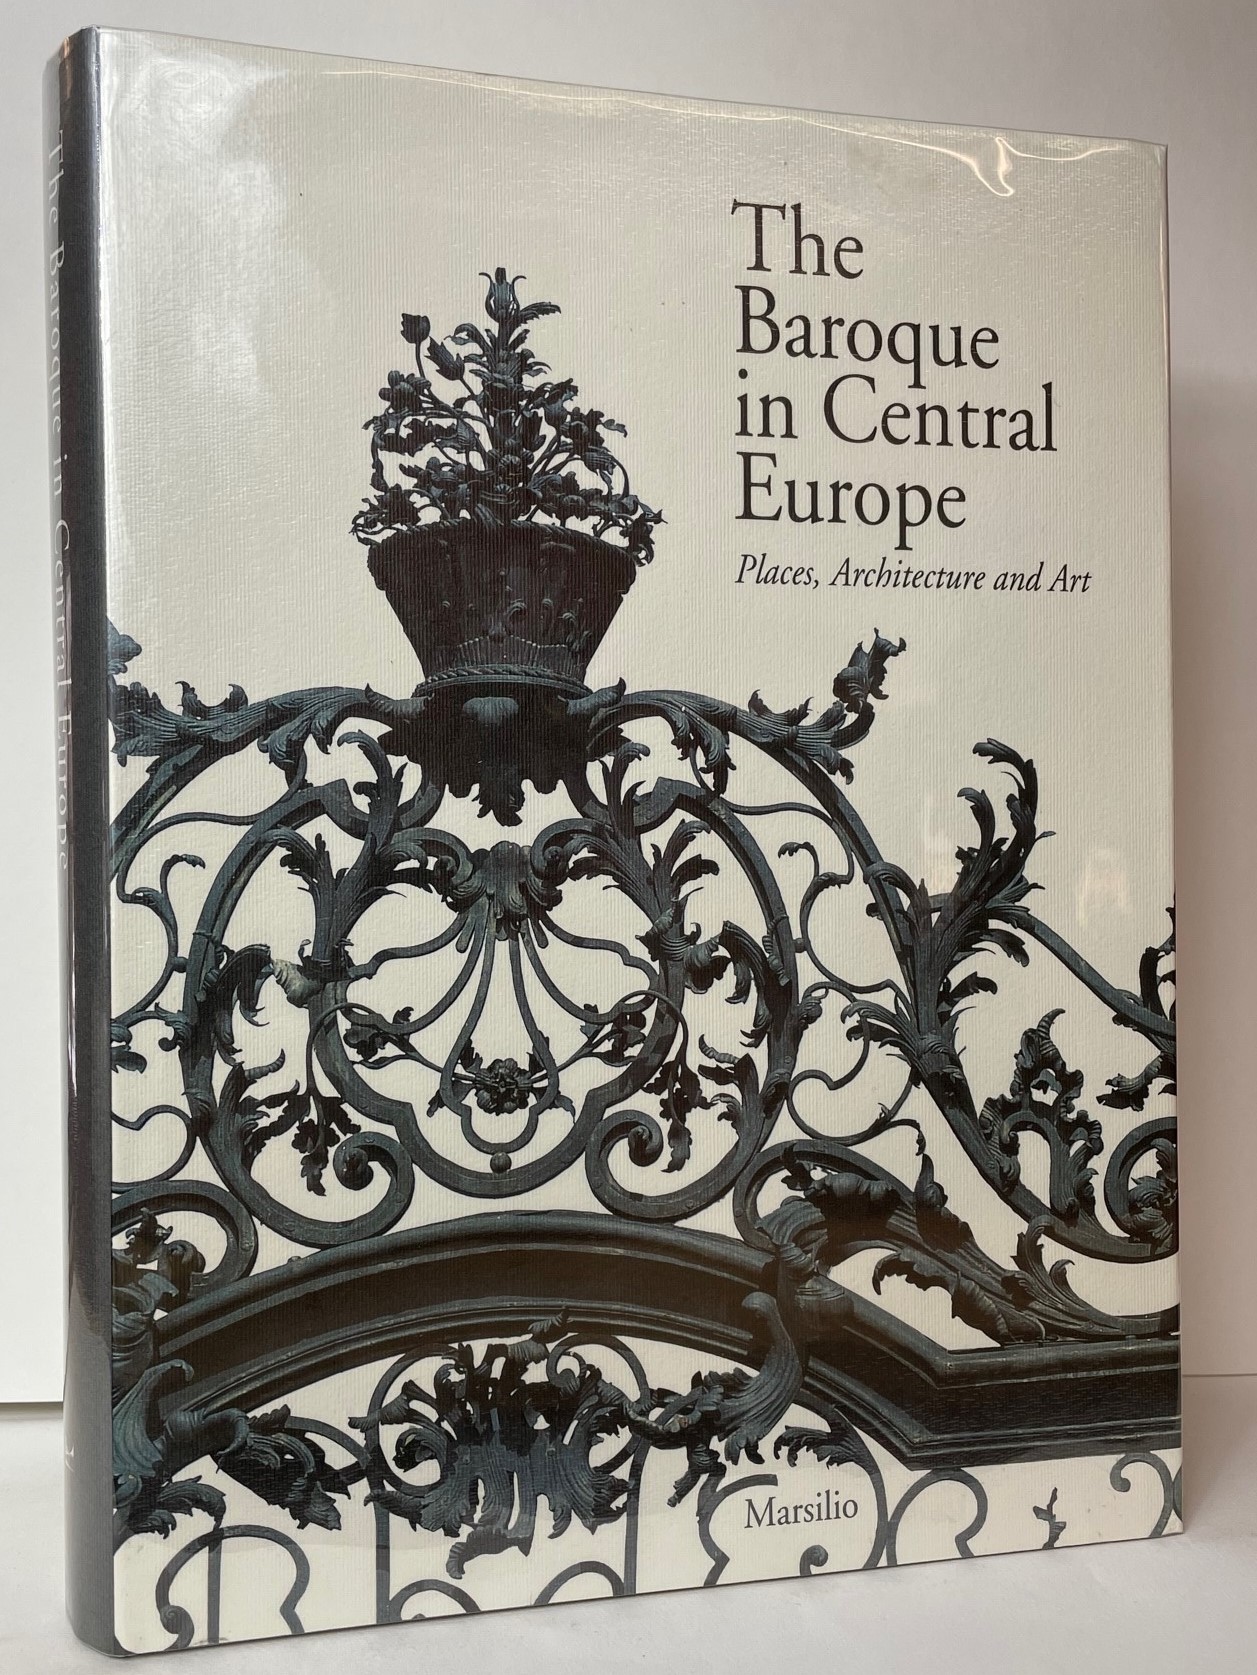 The Baroque in Central Europe: Places, Architecture and Art - Brusatin, Manlio & Pizzamiglio, Gilberto (Editors)